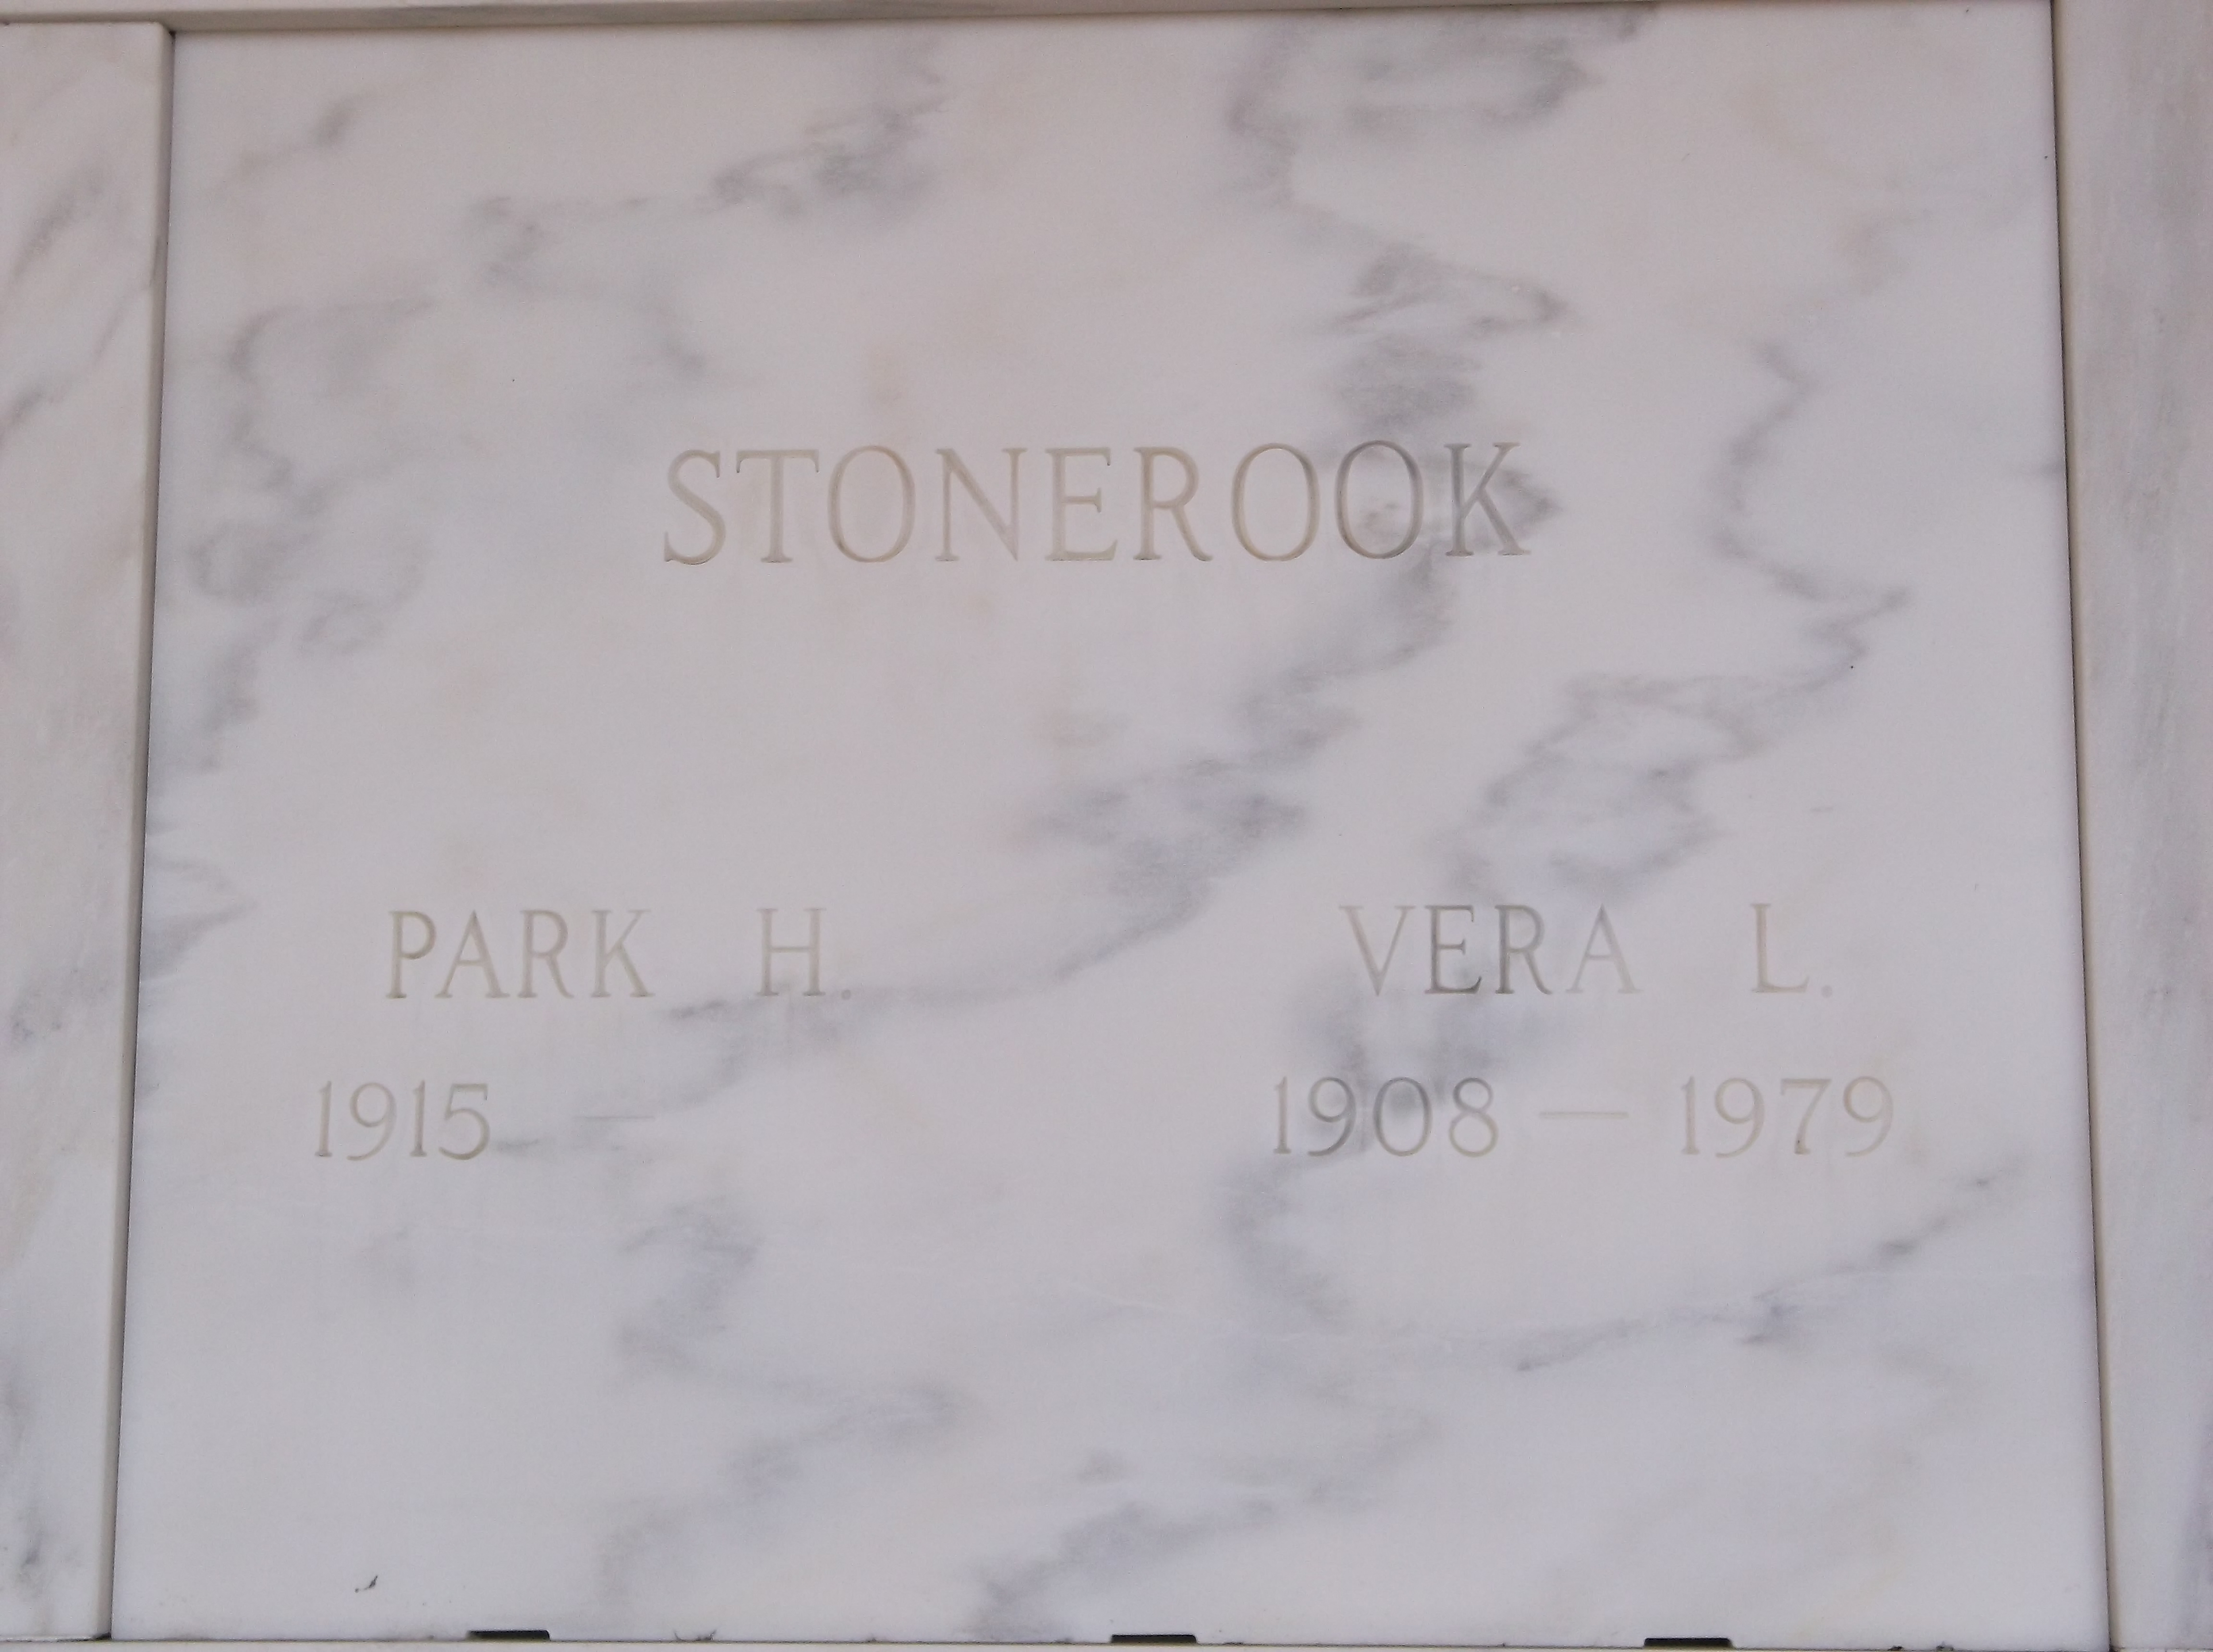 Vera L Stonerook